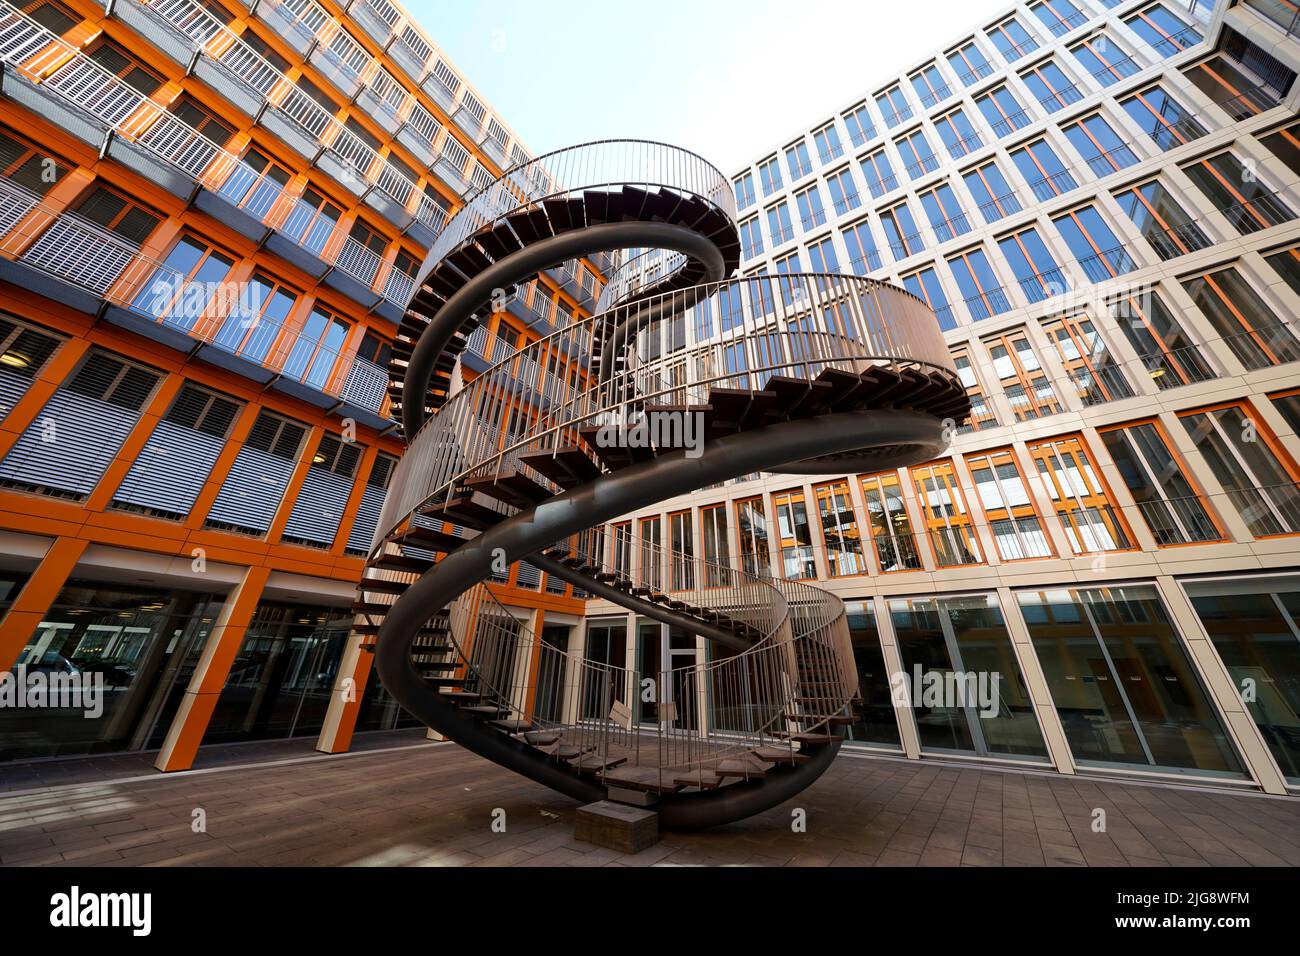 Germany, Bavaria, Munich, Schwanthalerhöhe, KPMG office building, courtyard, artwork, The Endless Staircase, artist Olafur Eliasson, 2004 Stock Photo